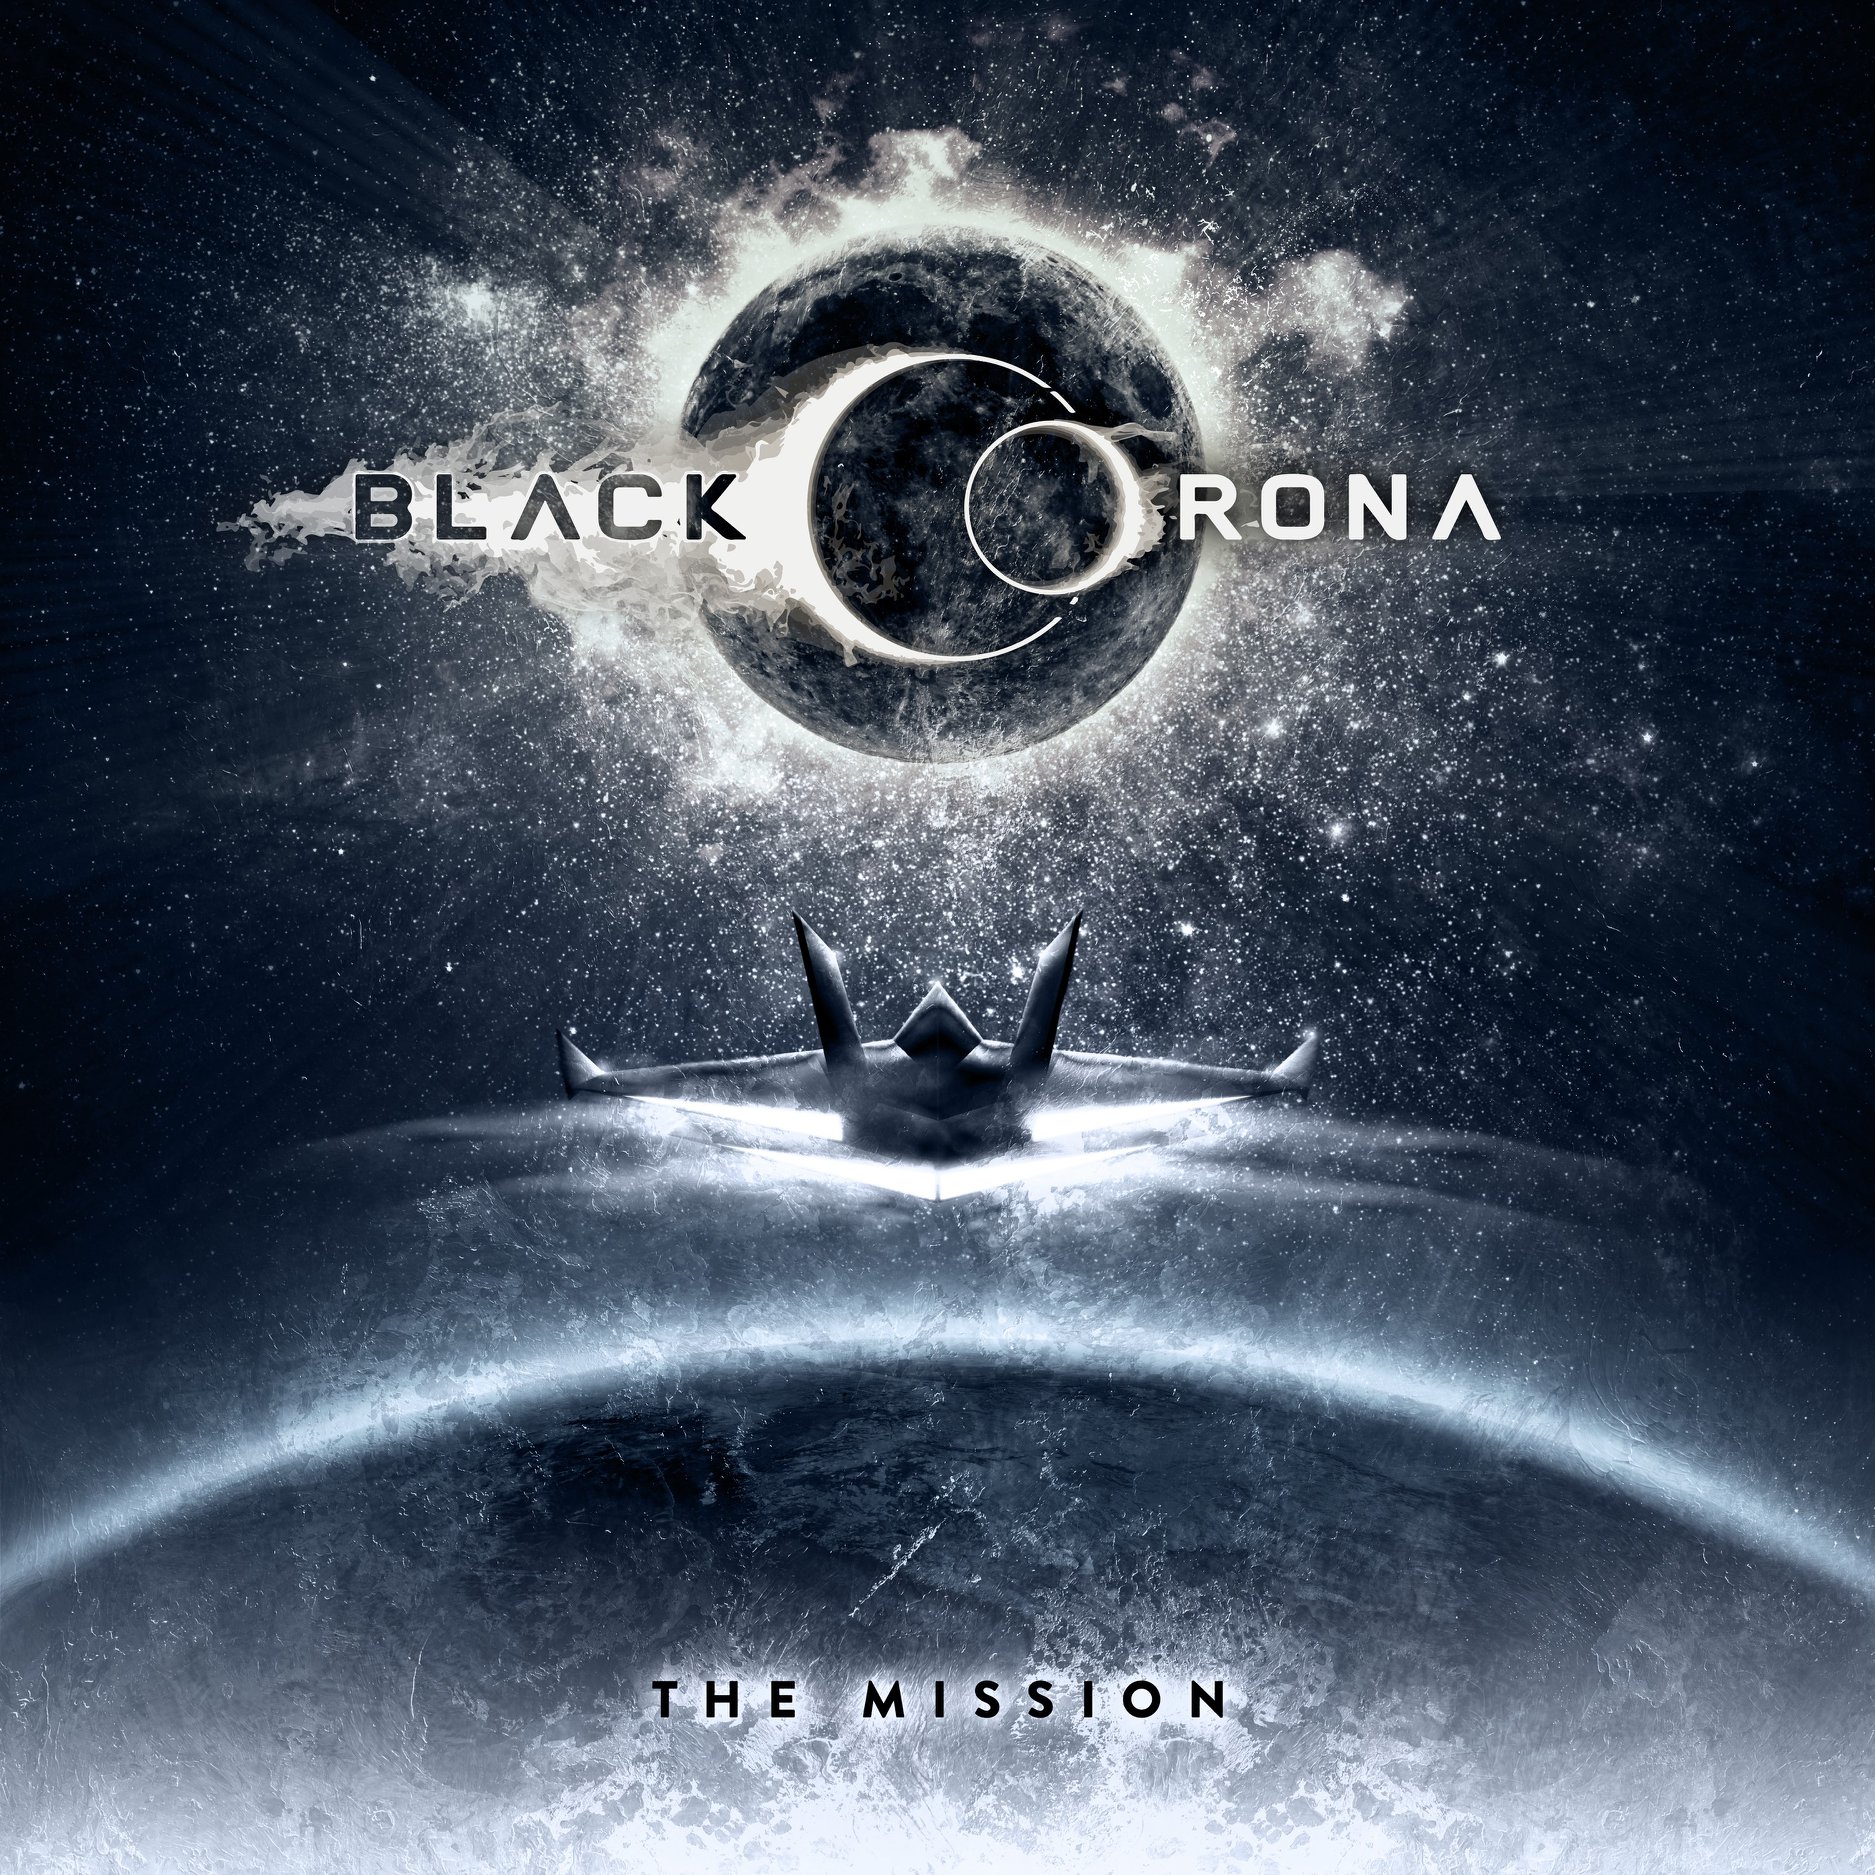 Black Corona: Nuevo vídeo lyric del tema “The Mission”